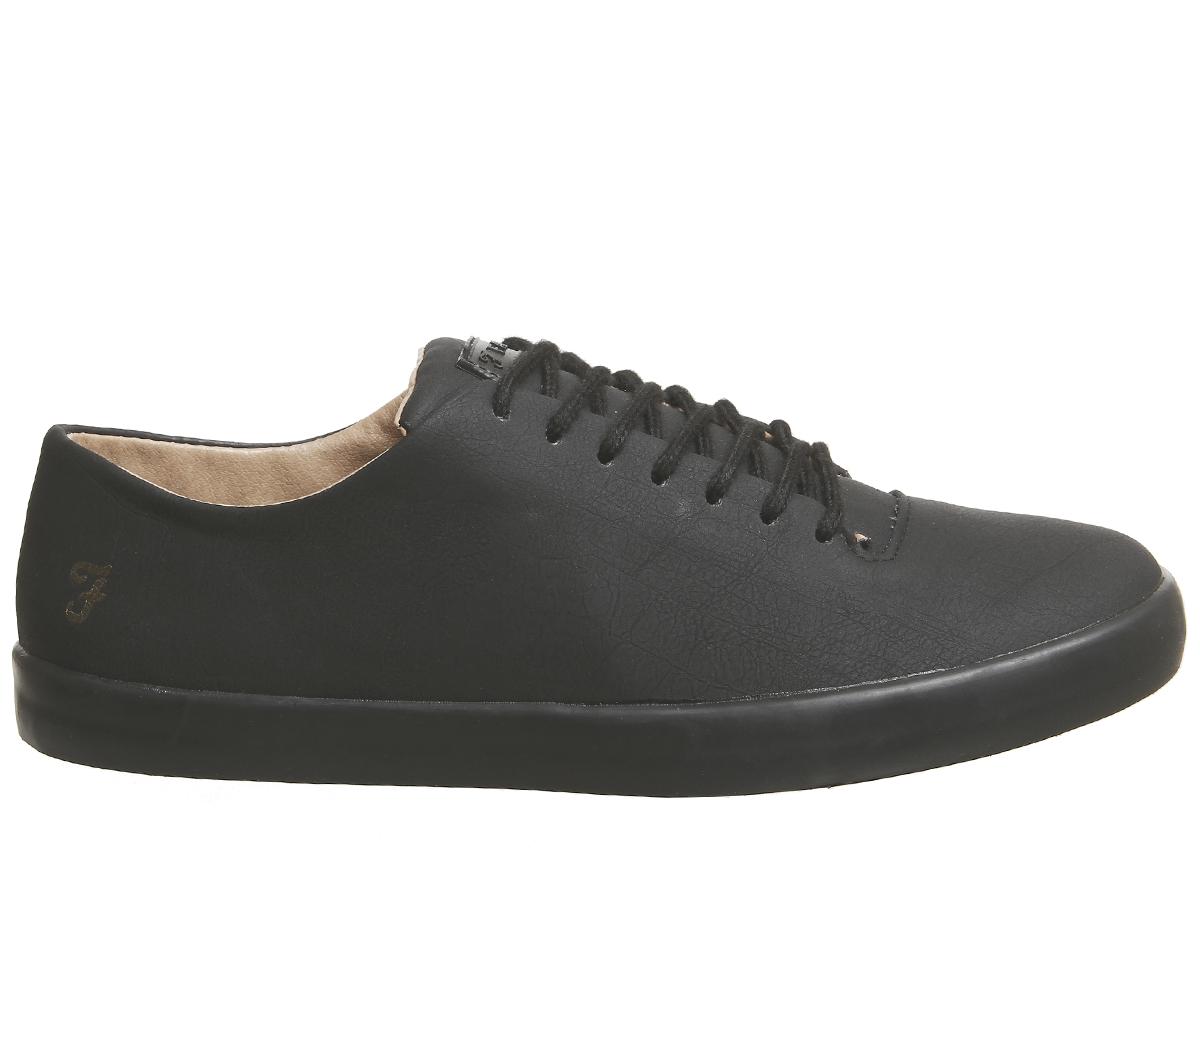 Farah Kiln Sneakers Black Nubuck - Men's Casual Shoes